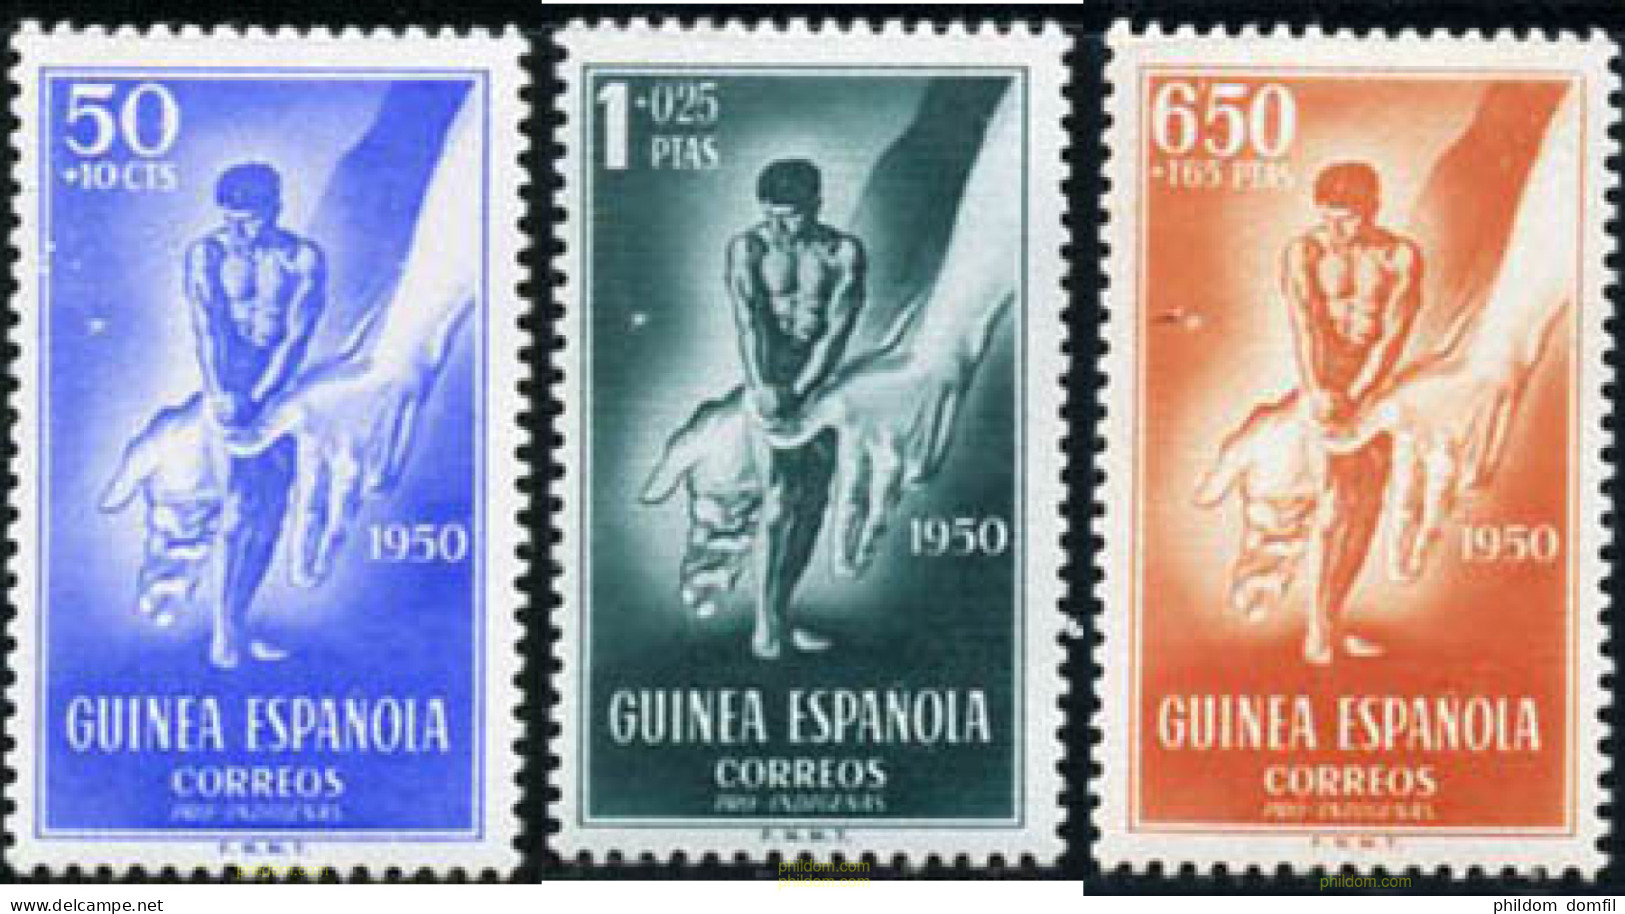 198490 MNH GUINEA ESPAÑOLA 1950 PRO INDIGENAS - Spaans-Guinea